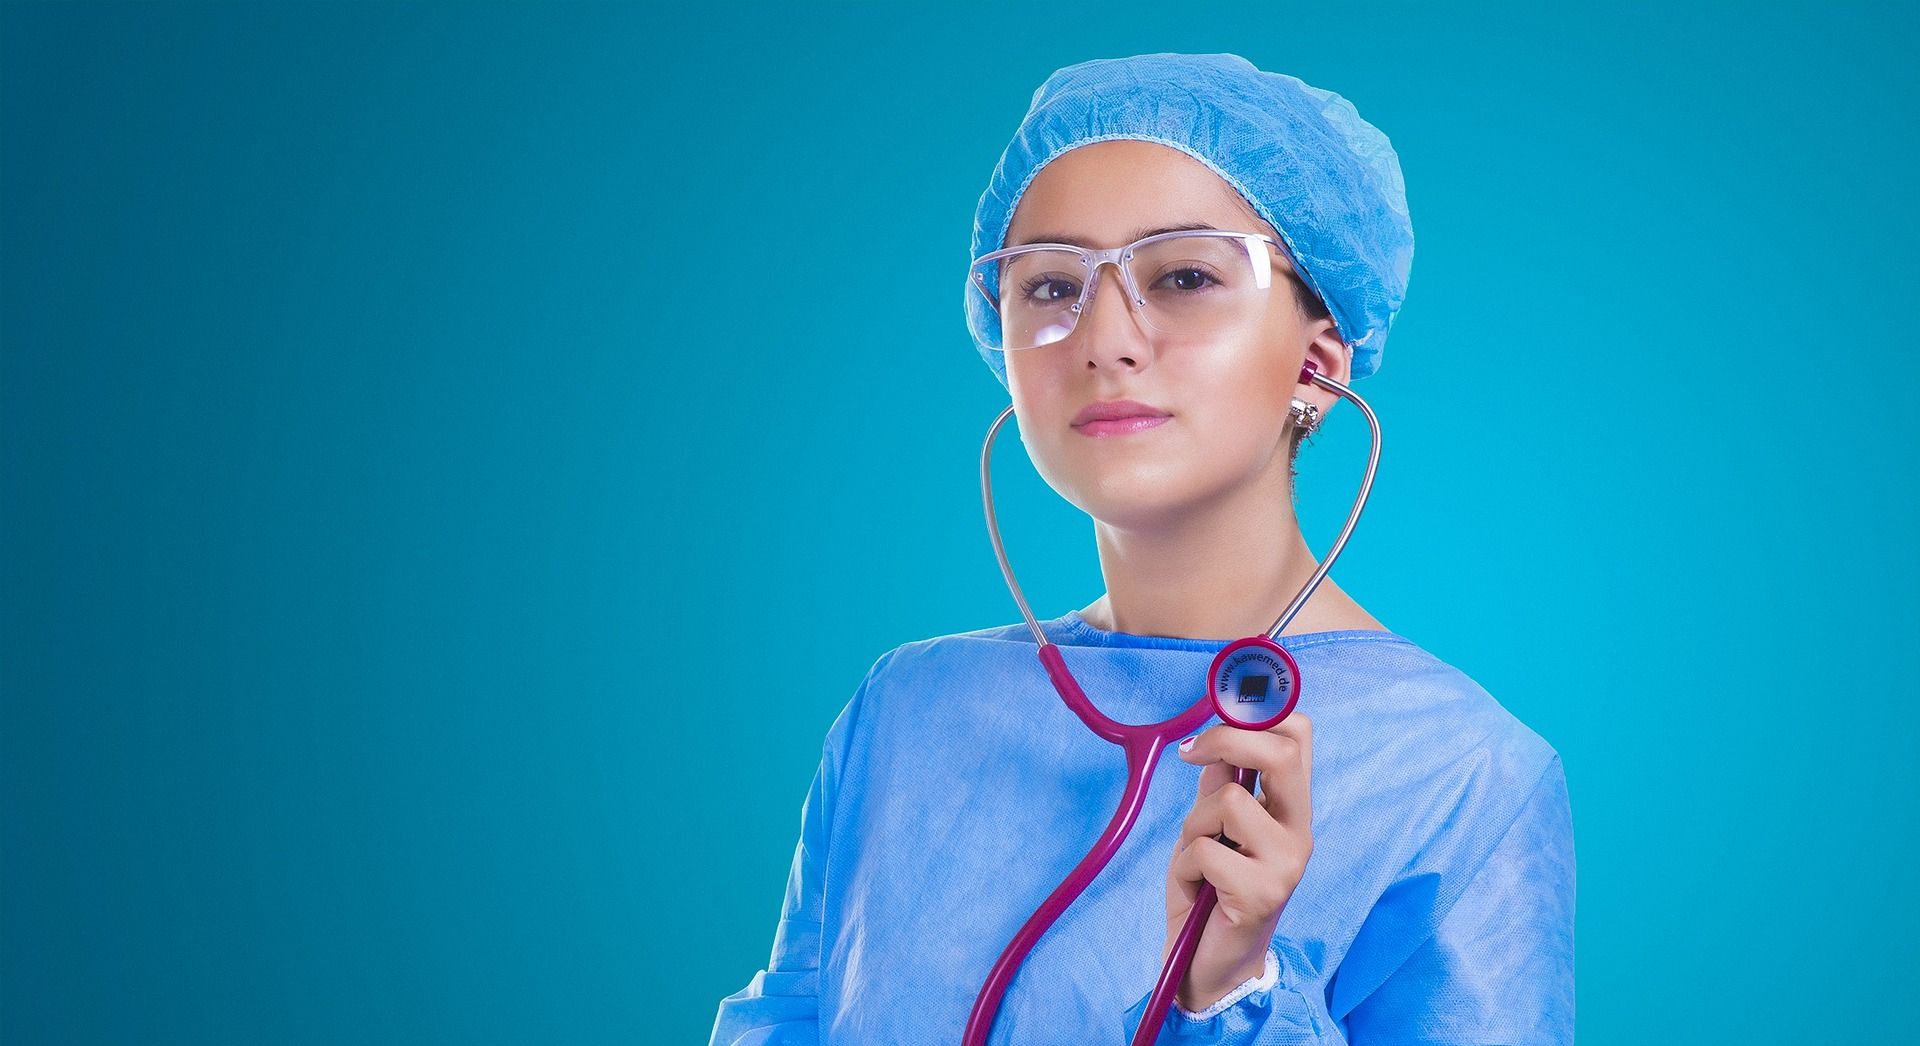 doctor with visor glasses in scrubs holding stethoscope